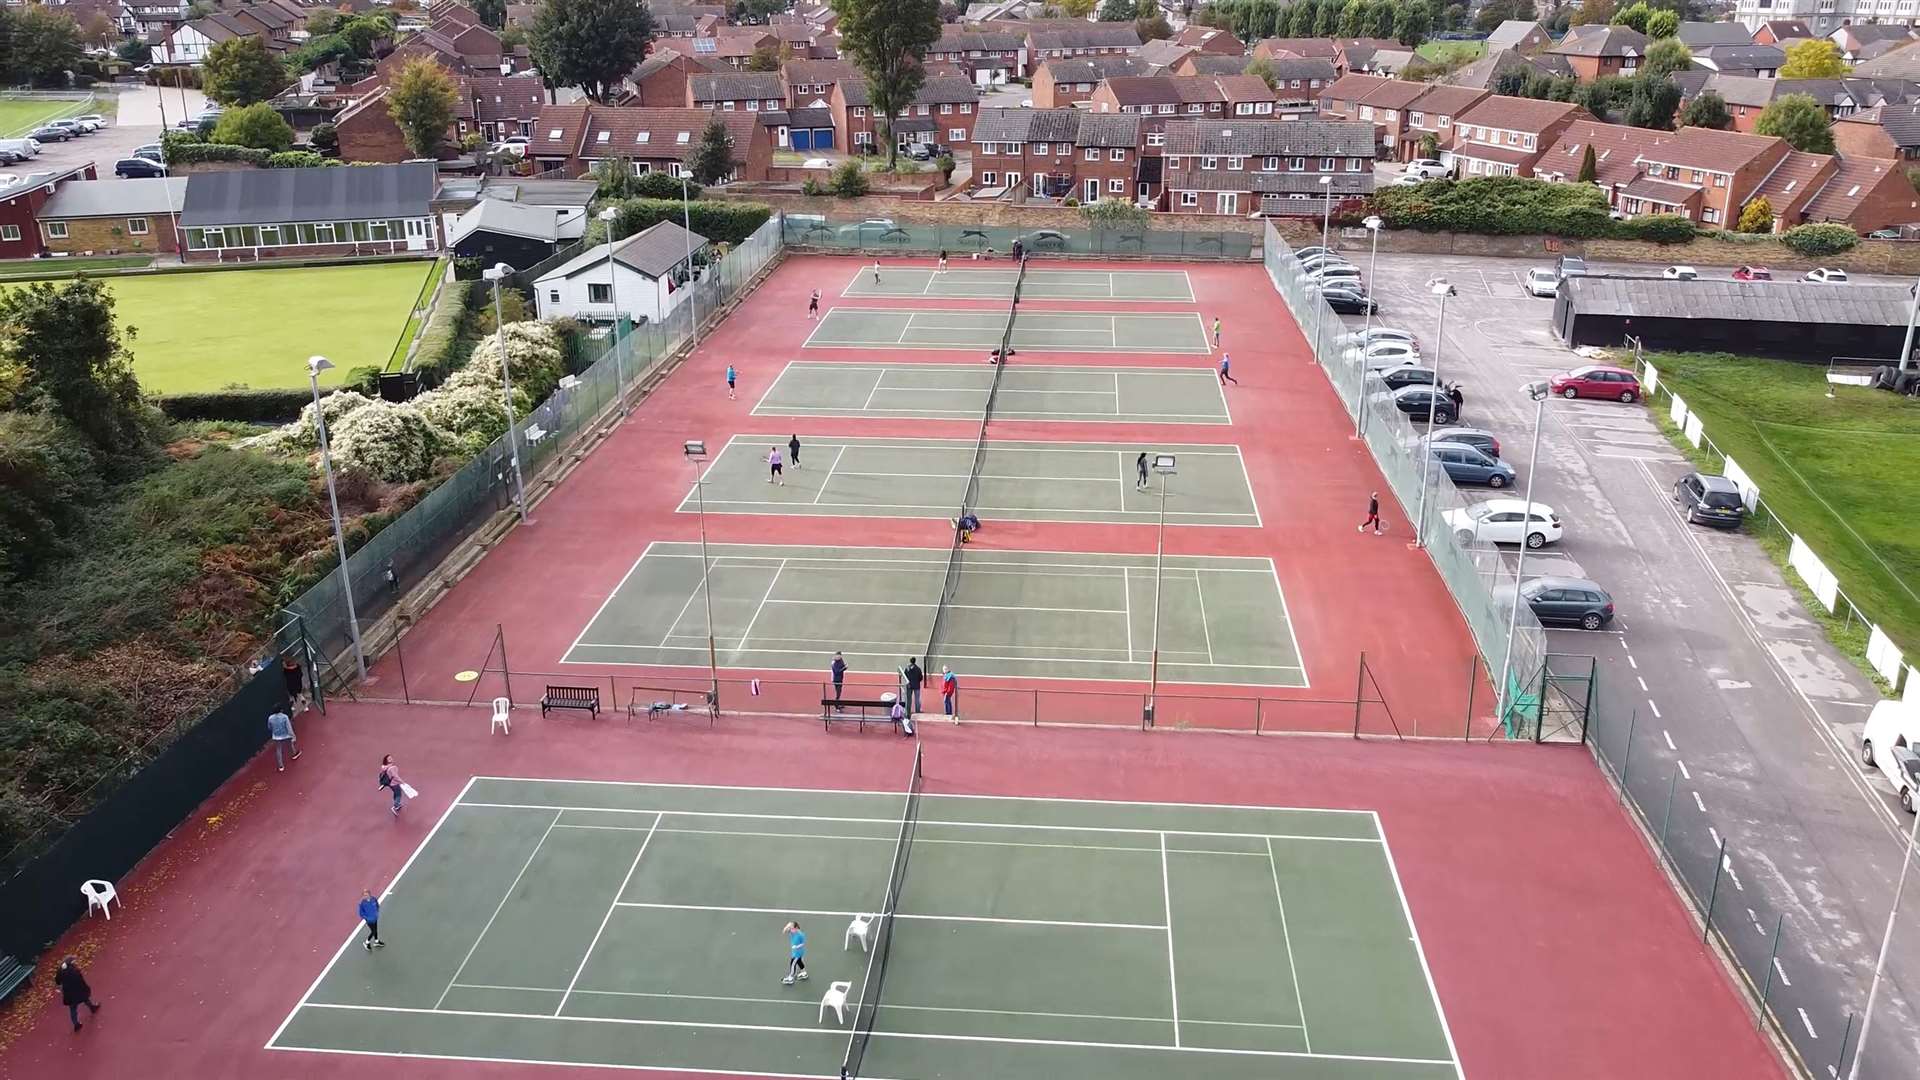 An aerial view of Gravesham Tennis Club taken October 2020. Picture: Gravesham Tennis Club